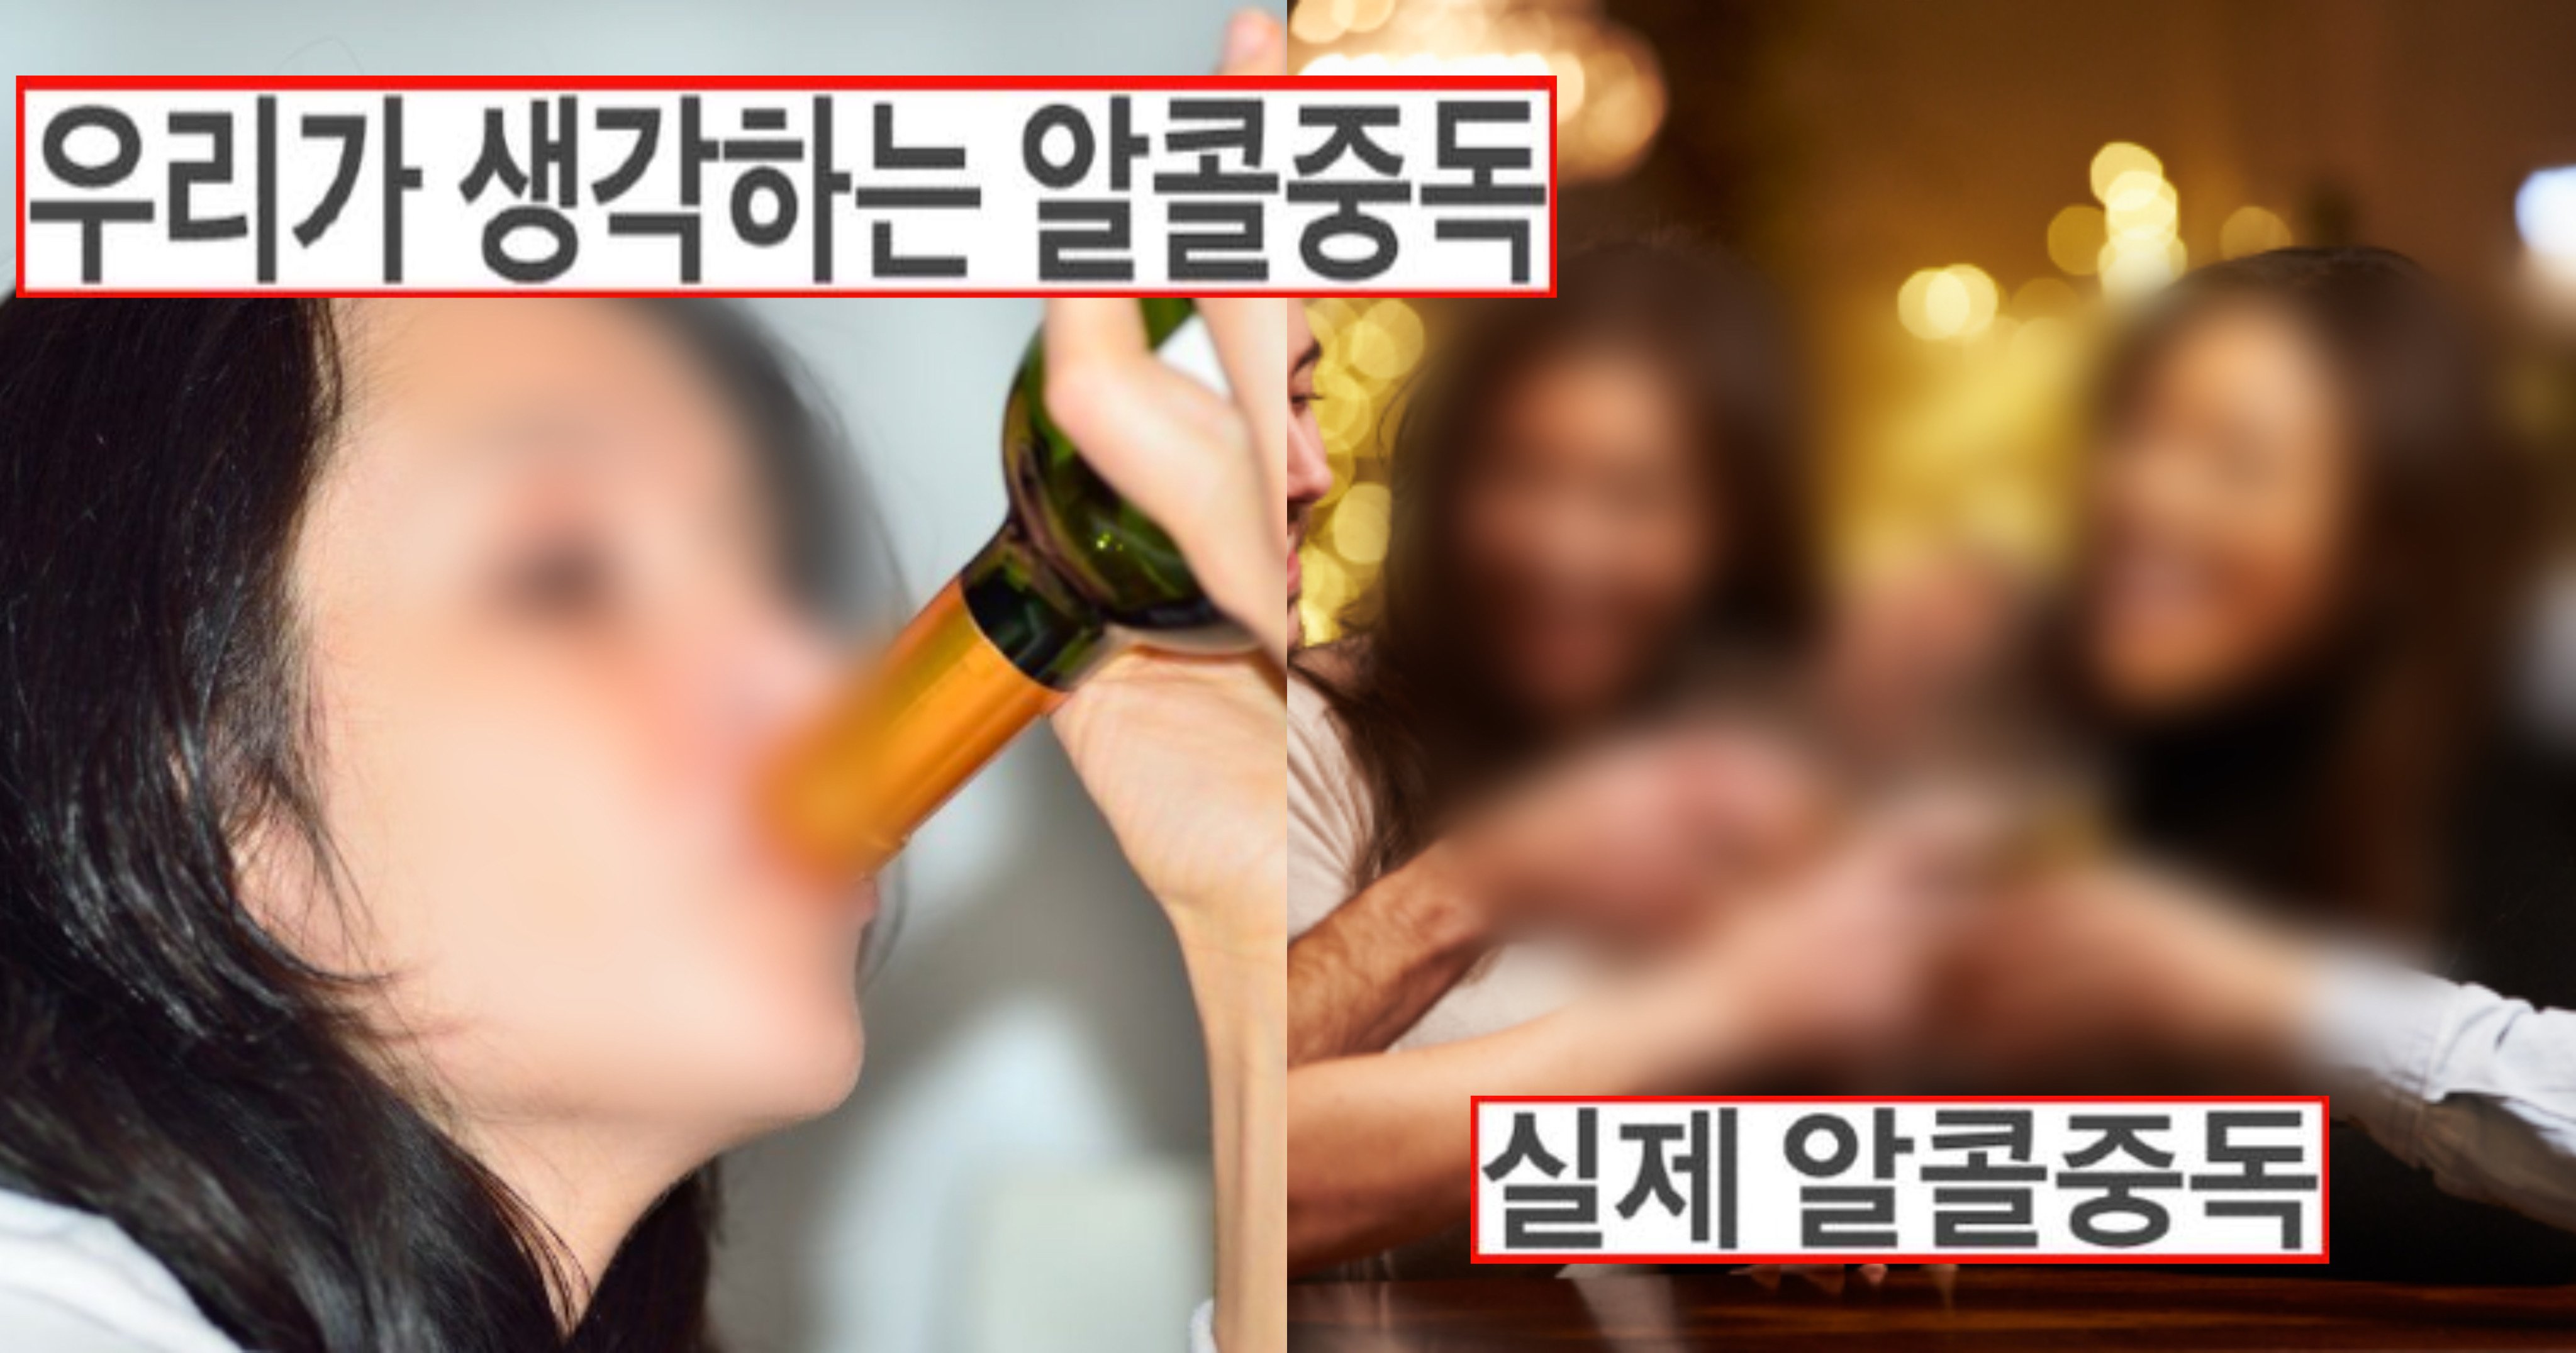 7e70298c 5908 4535 afa9 4bd56bb0f350.jpeg?resize=1200,630 - 실제와는 다른 한국인이 생각하는 '알콜중독자'의 모습